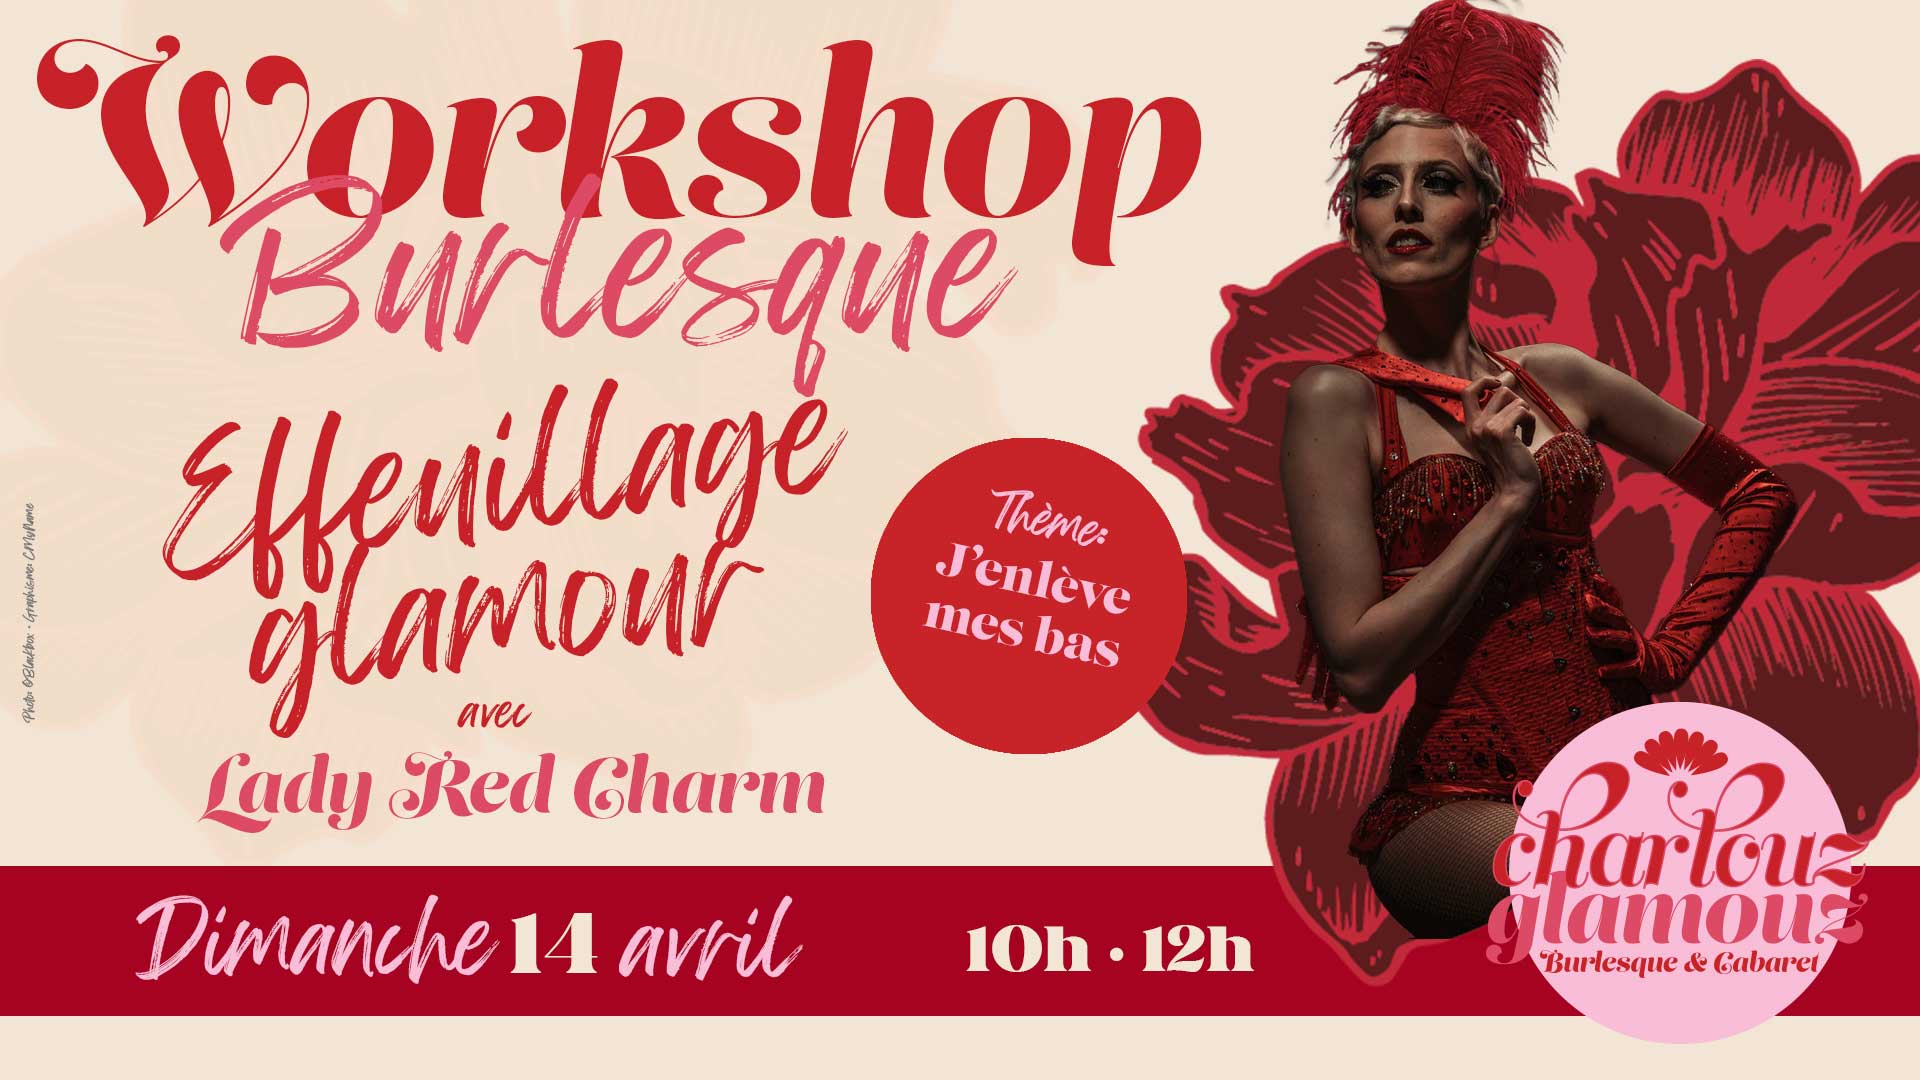 Workshop burlesque bas